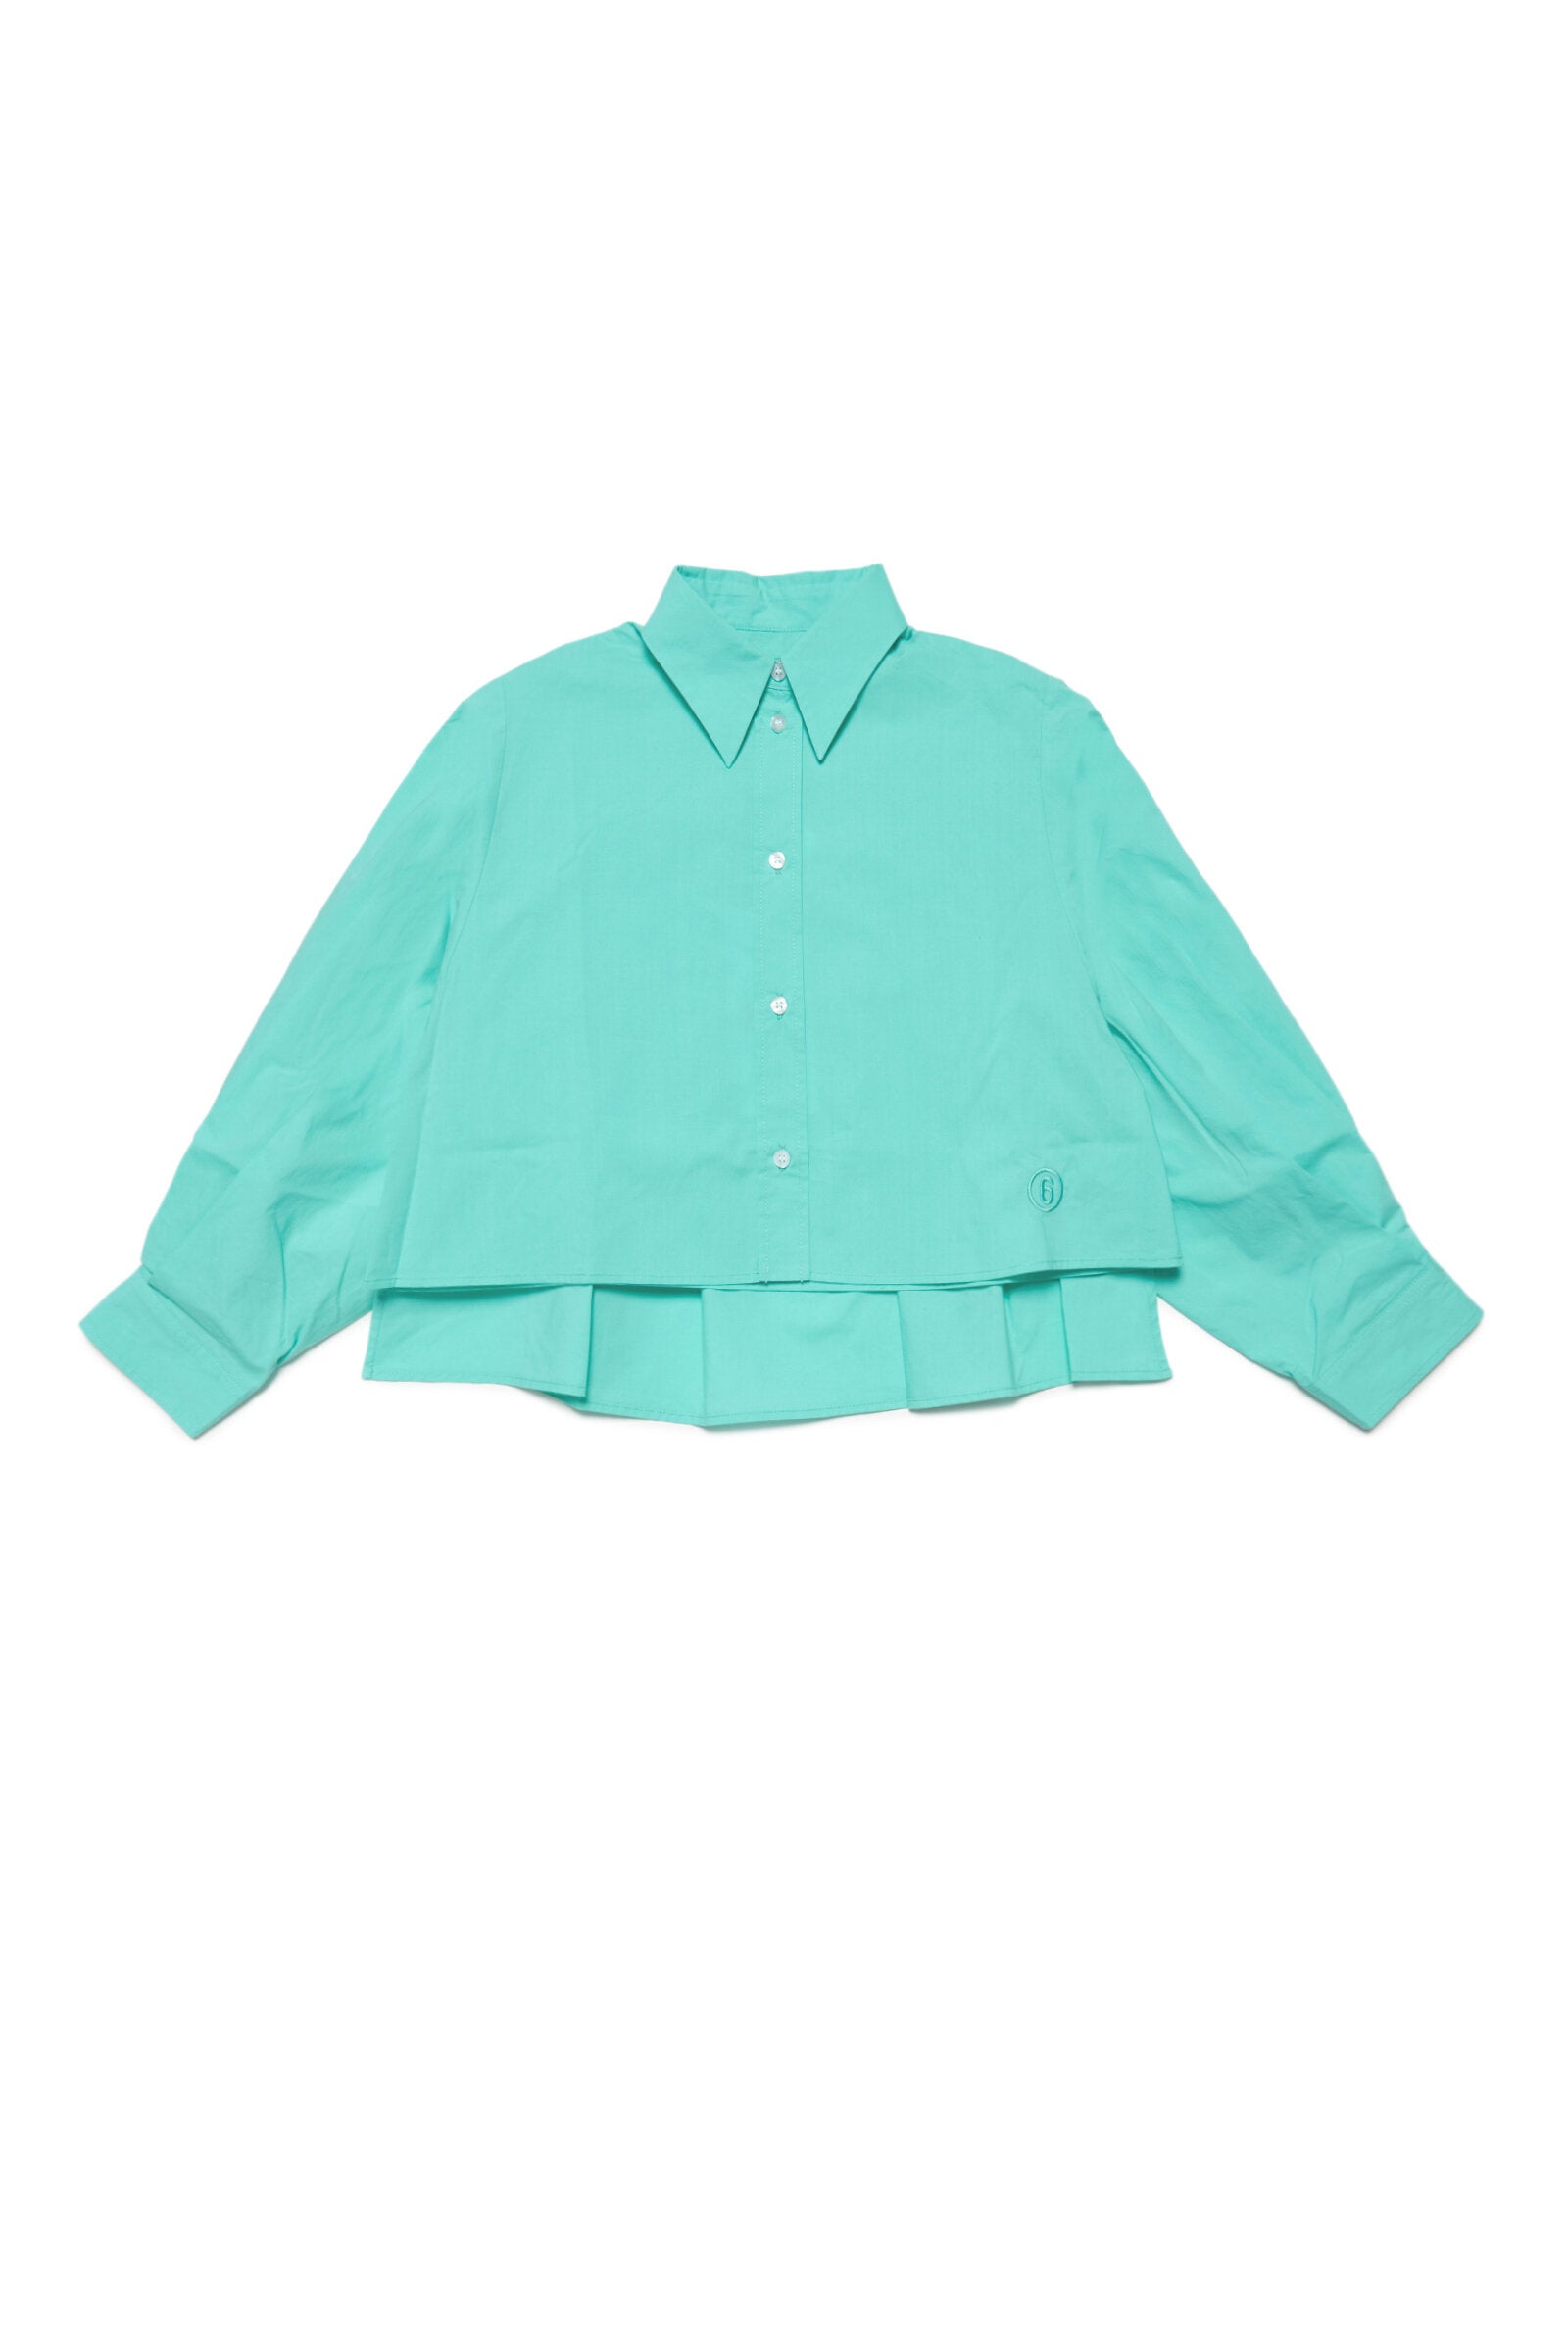 Aquamarine avant-garde style poplin shirt